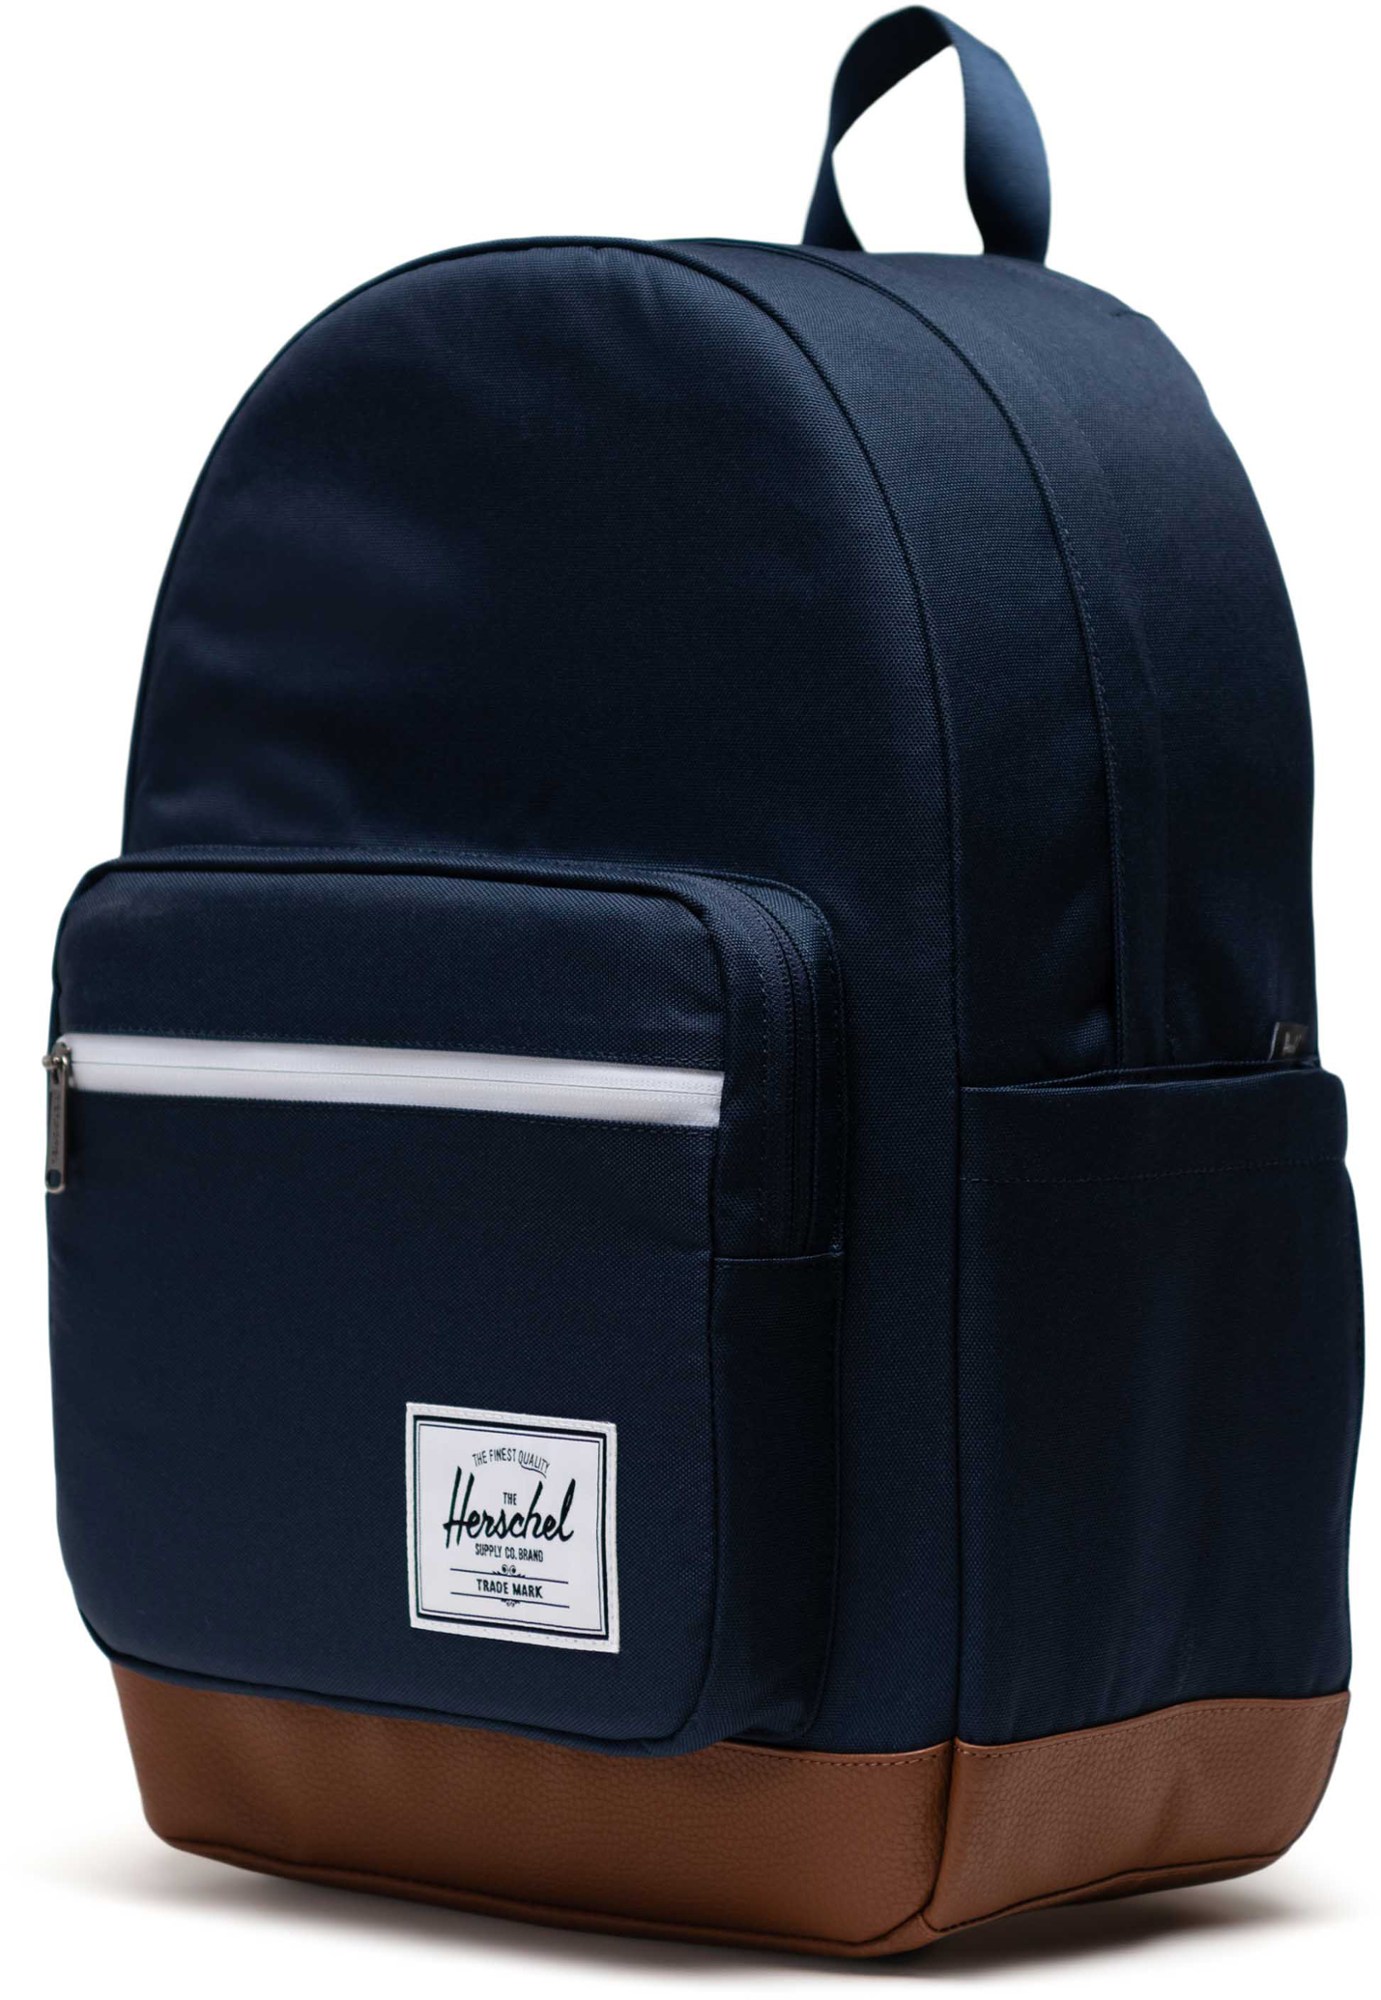 рюкзак pop quiz backpack herschel supply co цвет light taupe chicory coffee Пакет поп-викторин Herschel Supply Co., синий